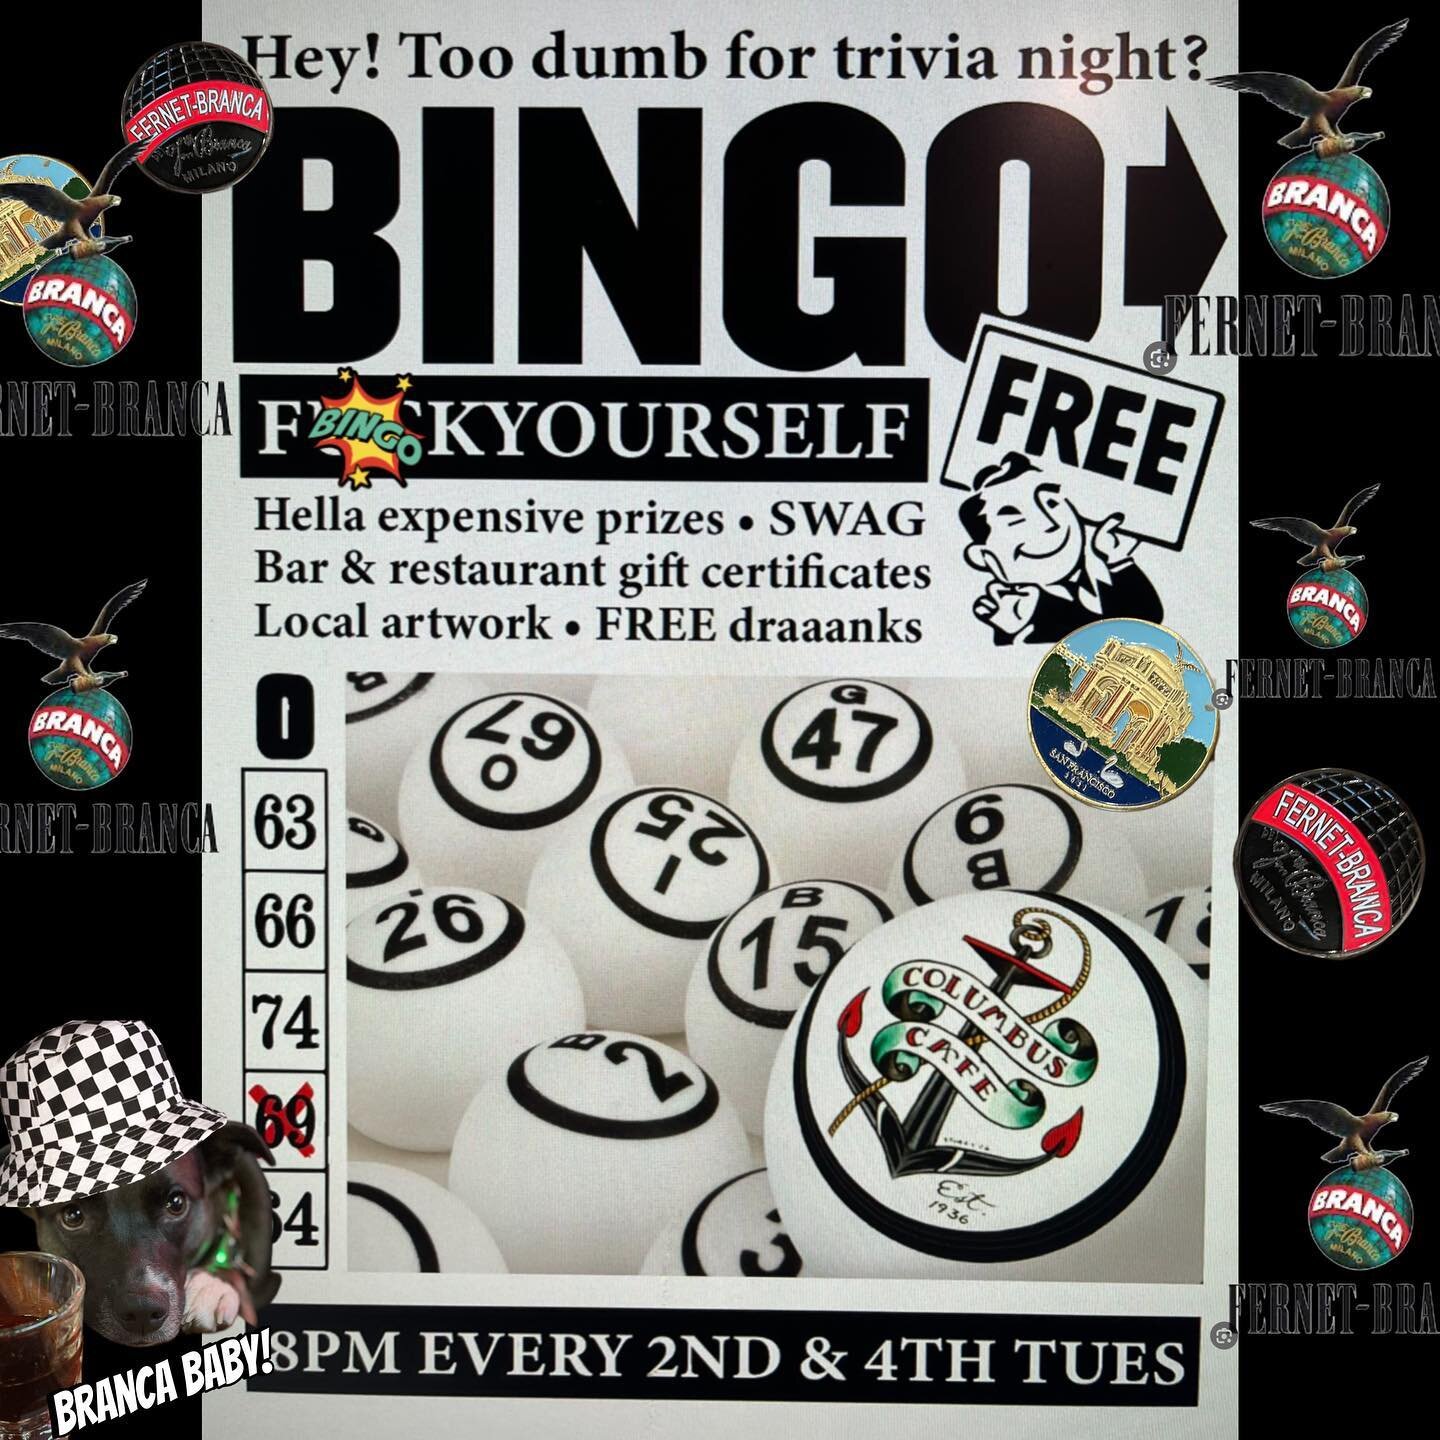 Bingo this Tuesday 8pm sponsored by Fernet Branca!!!!